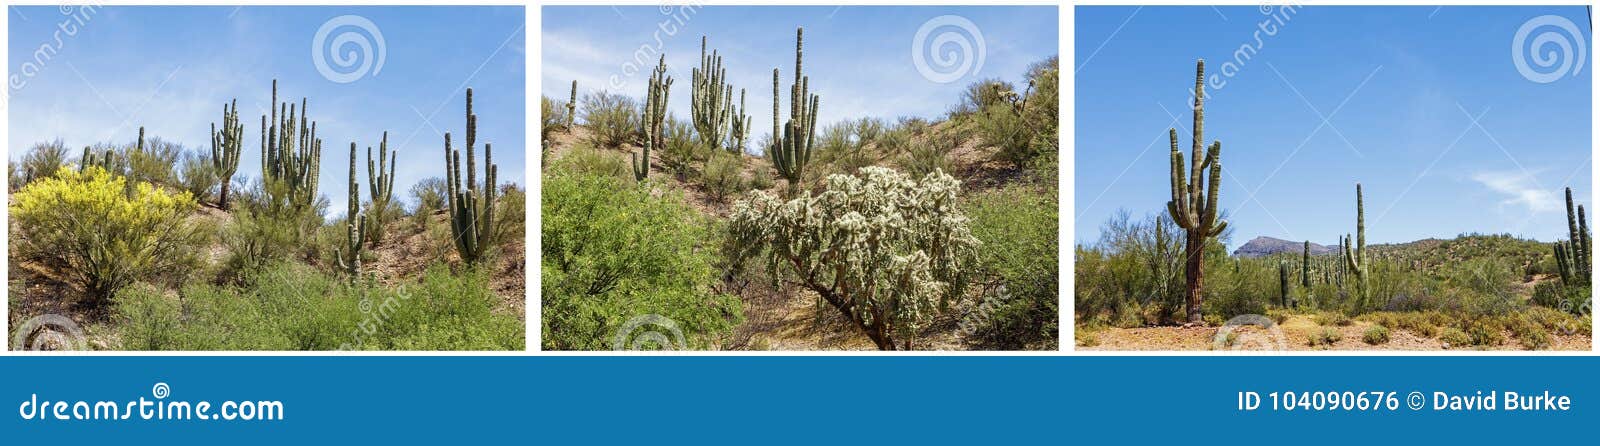 saguaro cactus southwestern desert scene collage